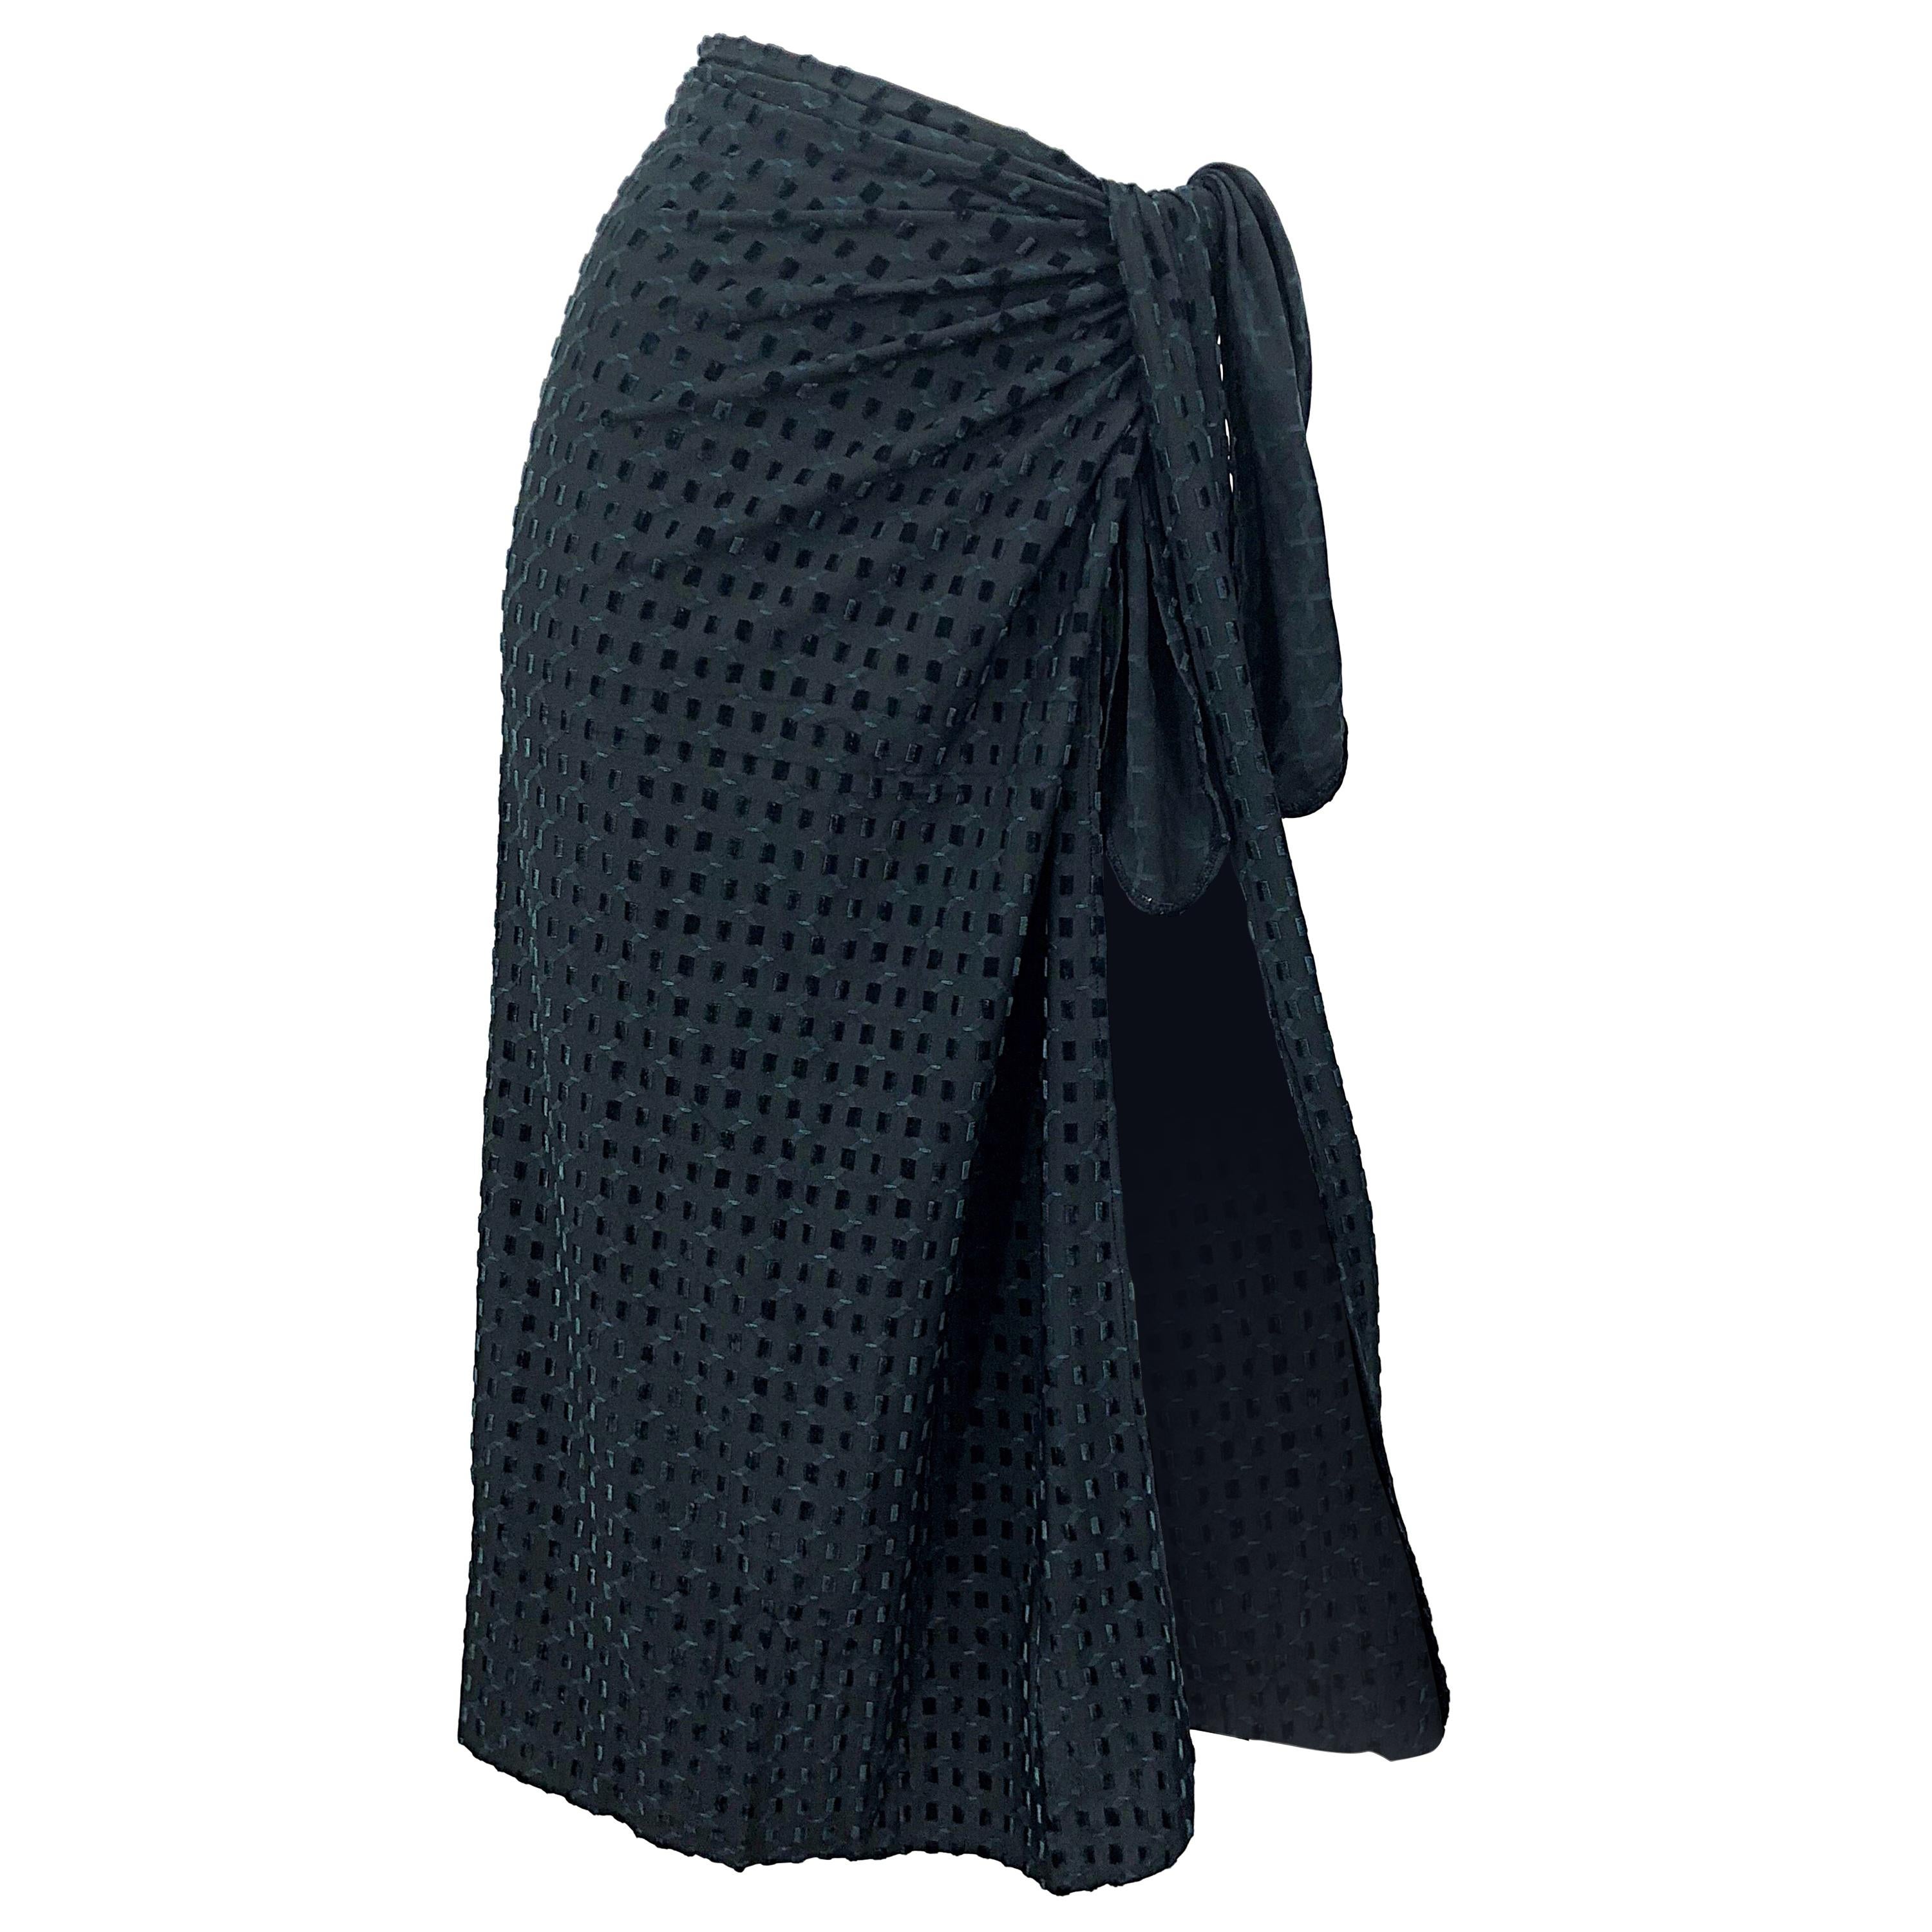 Vintage Bill Blass Swimsuit Sarong 1990s Black and Hunter Green 90s Wrap Skirt